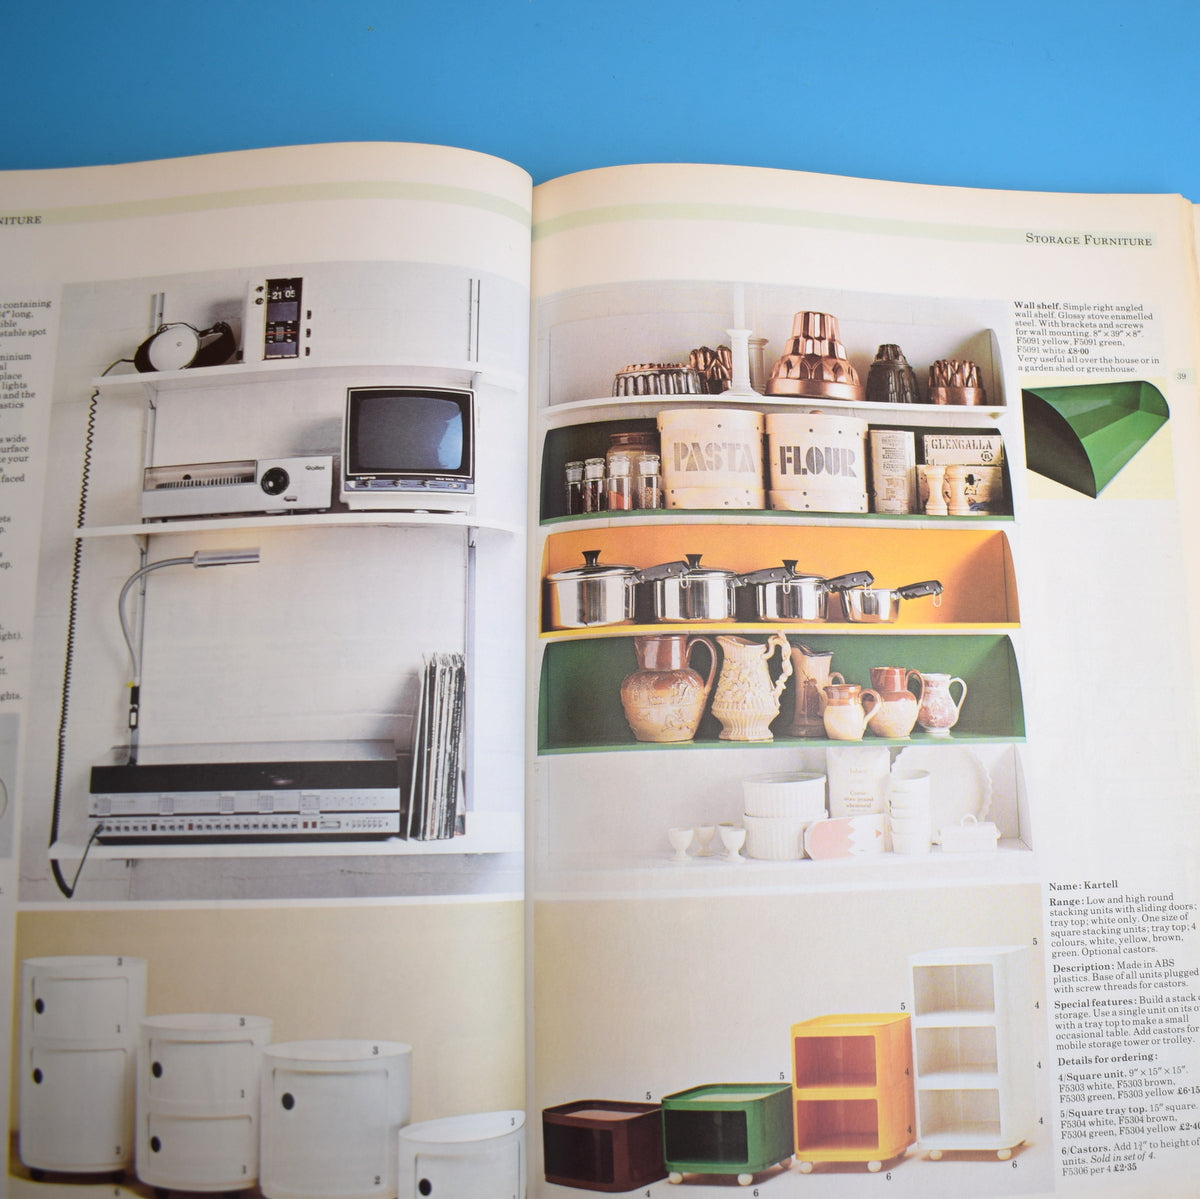 Vintage 1970s Habitat Catalogue / Brochure -1975